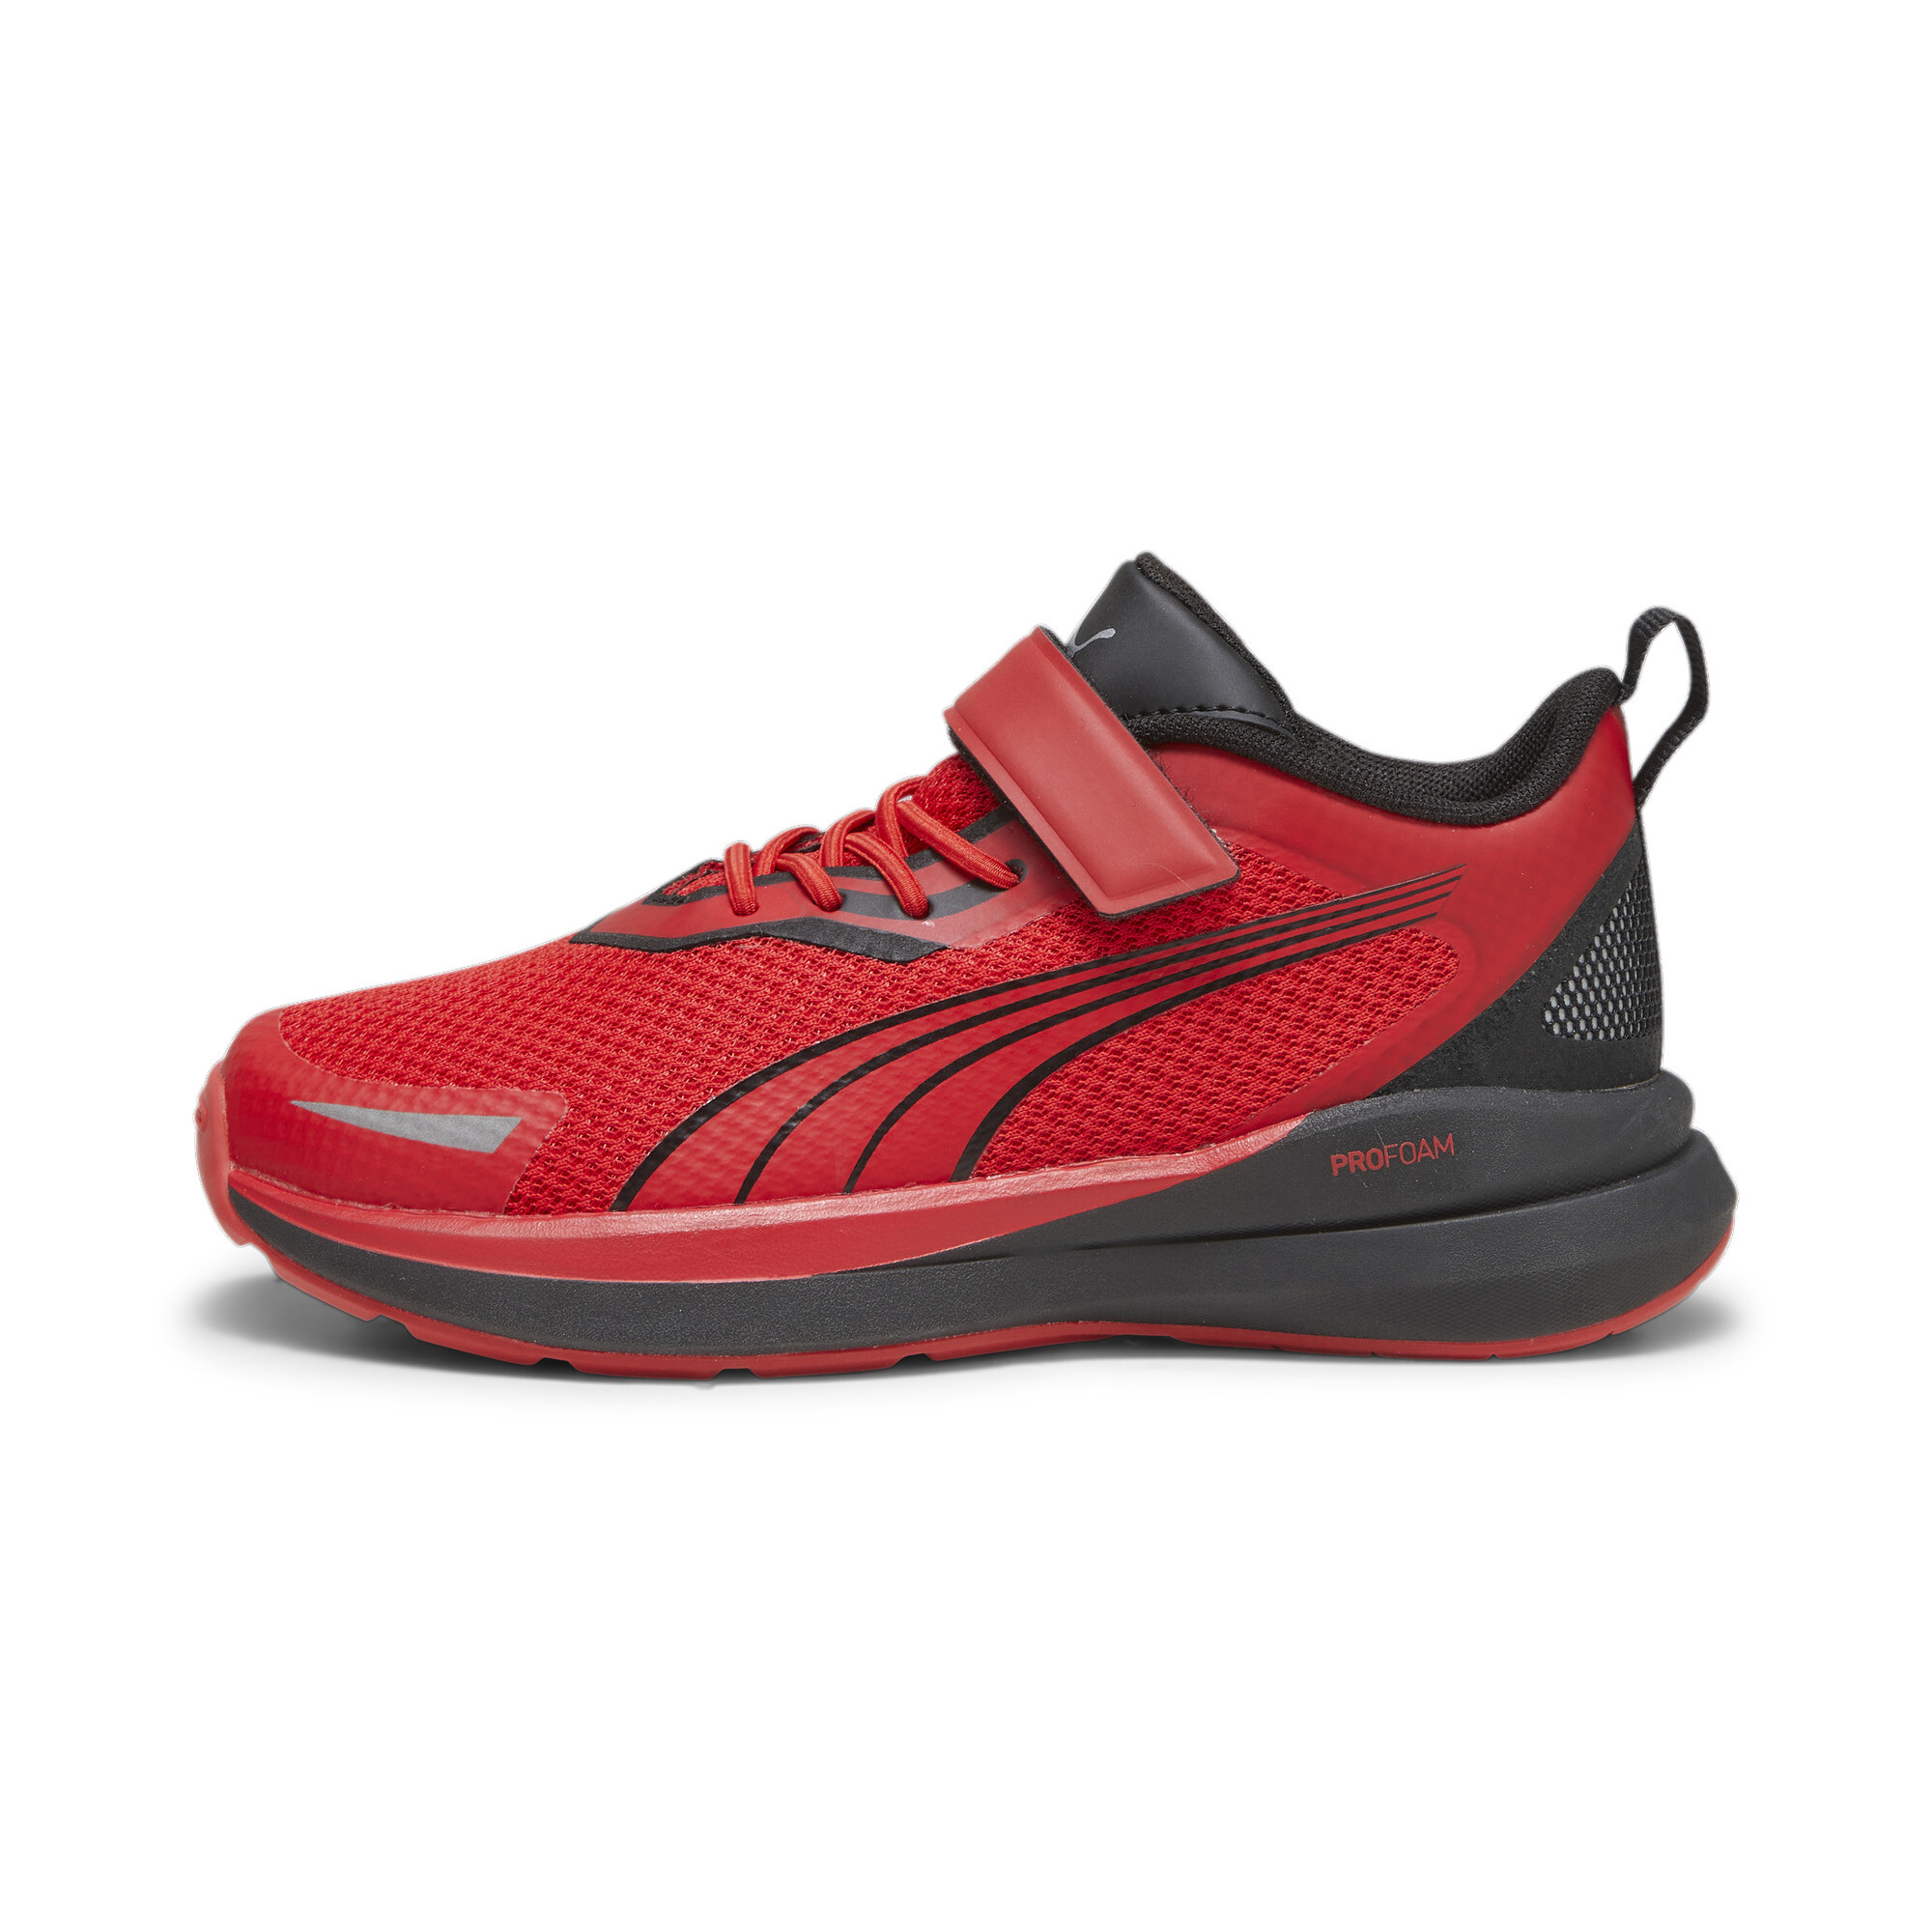 Puma Kruz Kids' Sneakers, Red, Size 28, Shoes